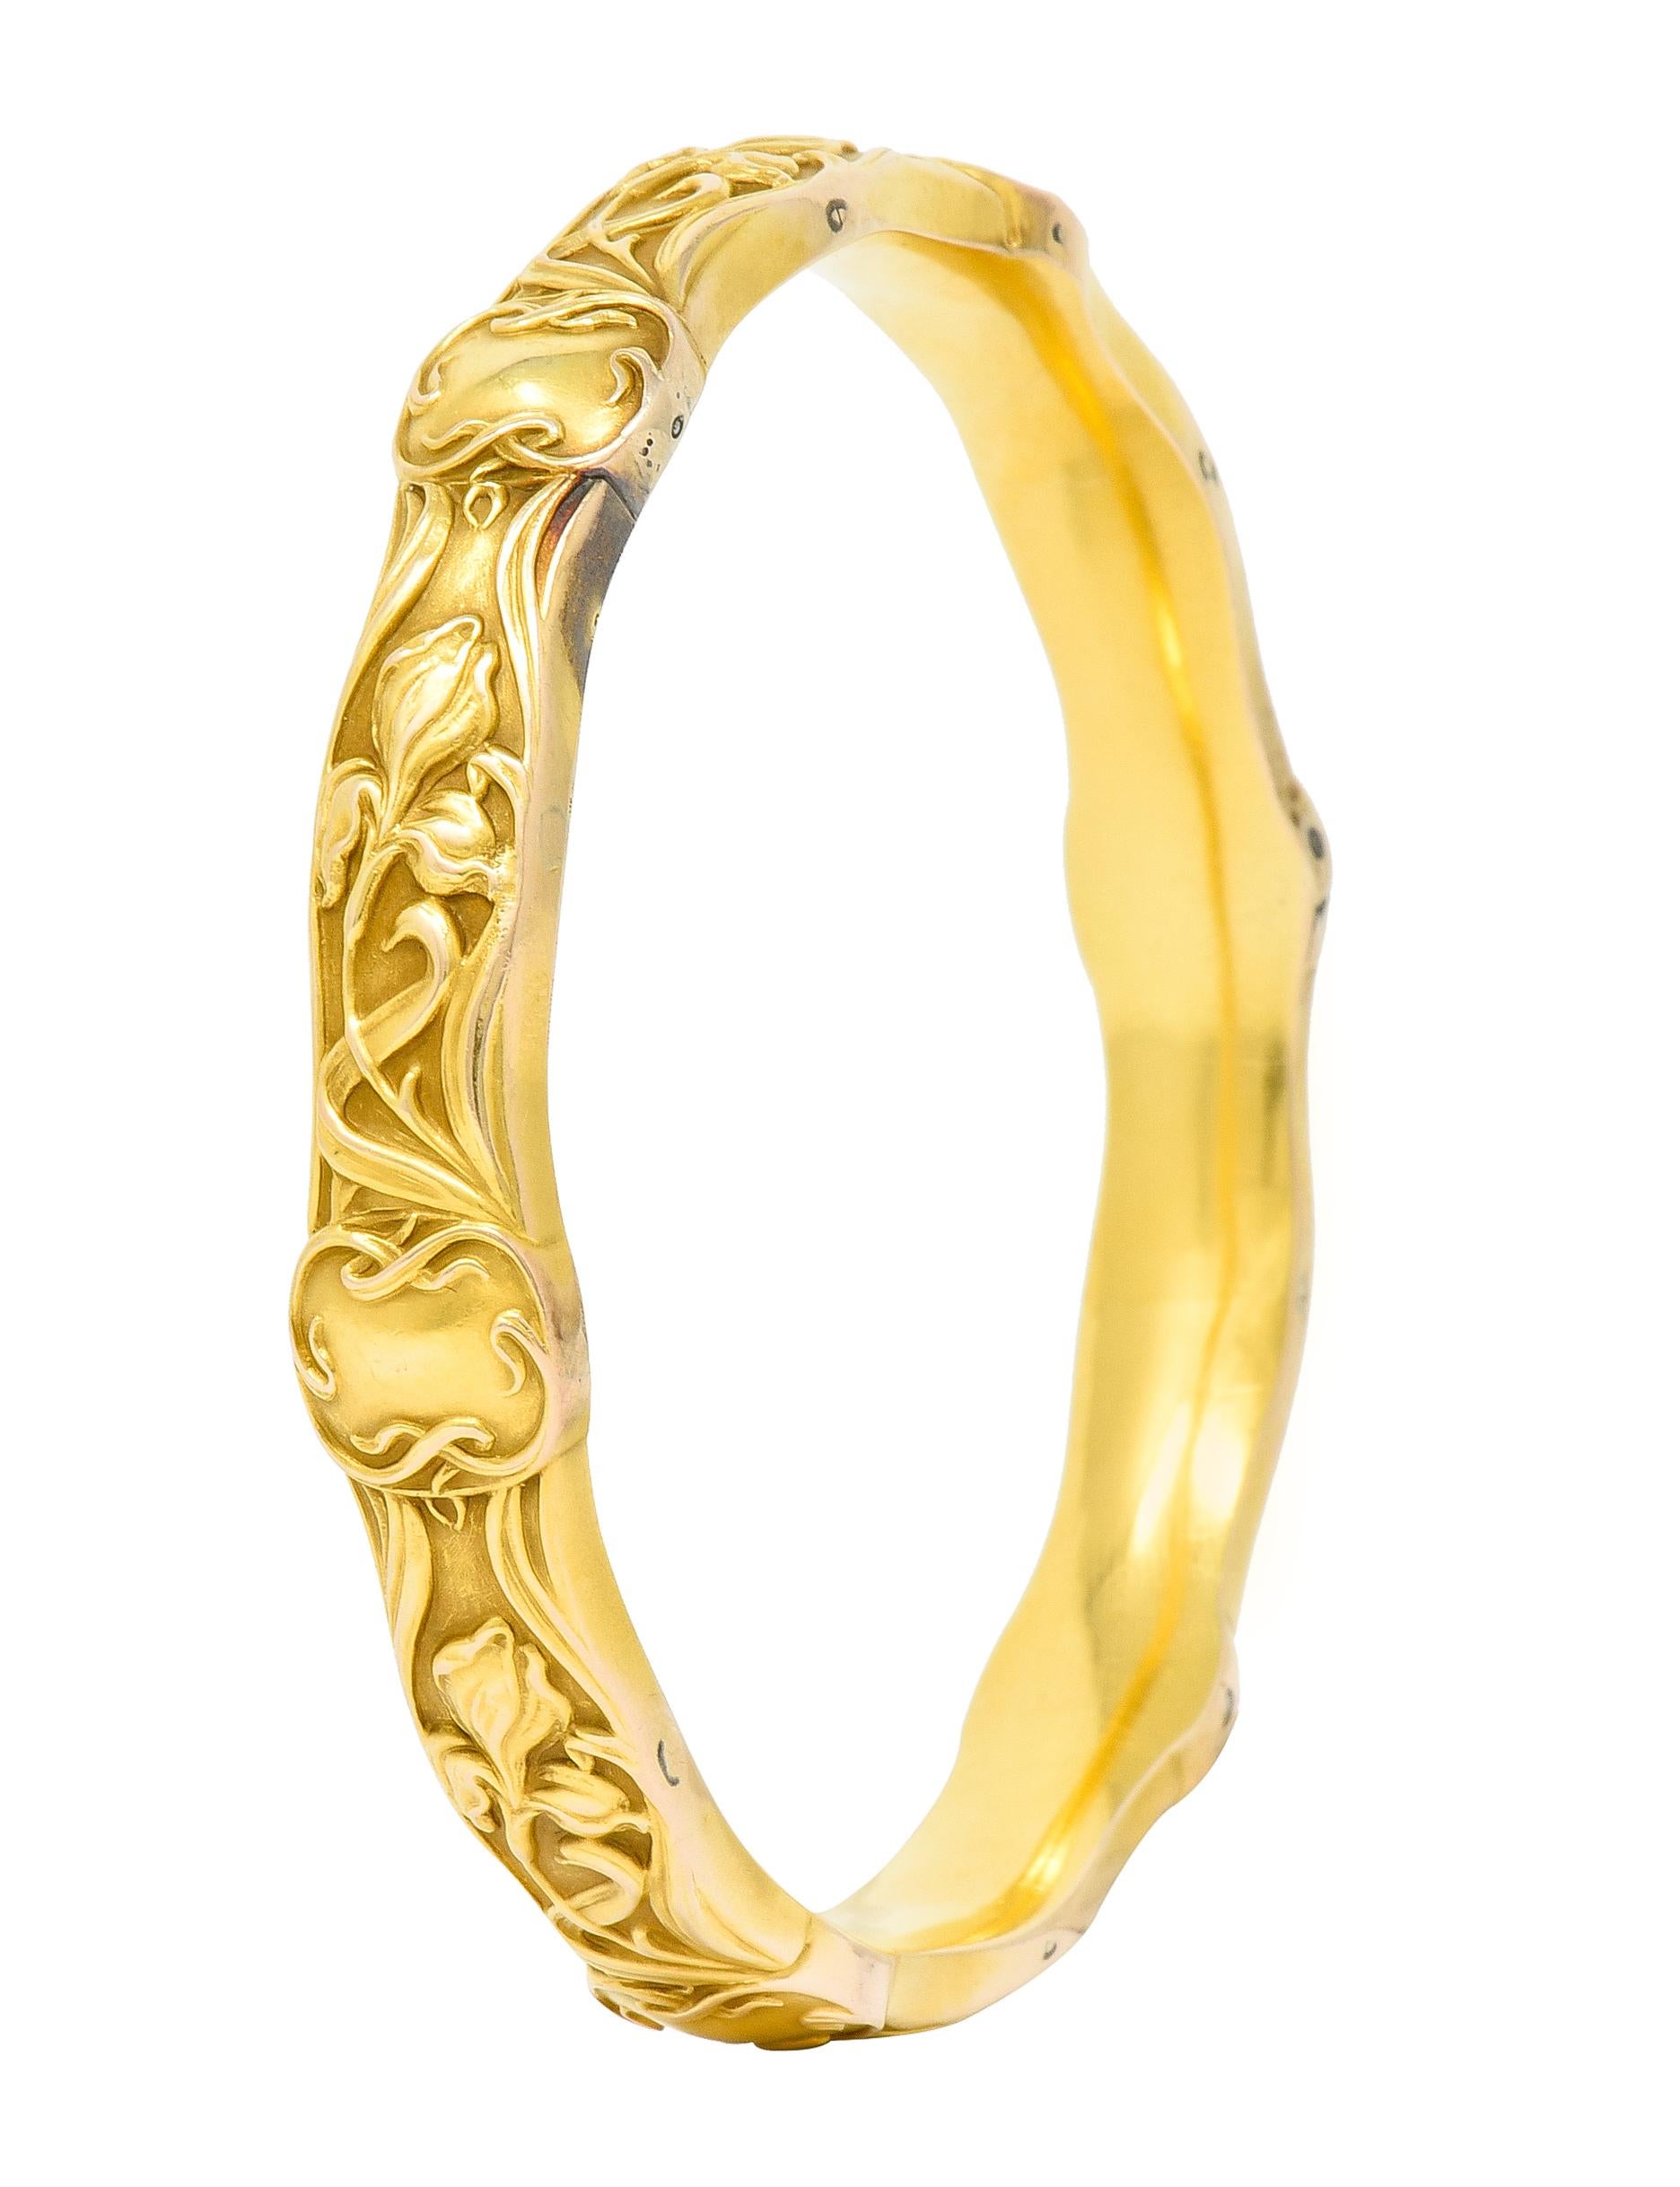 Women's or Men's Riker Brothers Art Nouveau 14 Karat Gold Iris Flower Bangle Bracelet